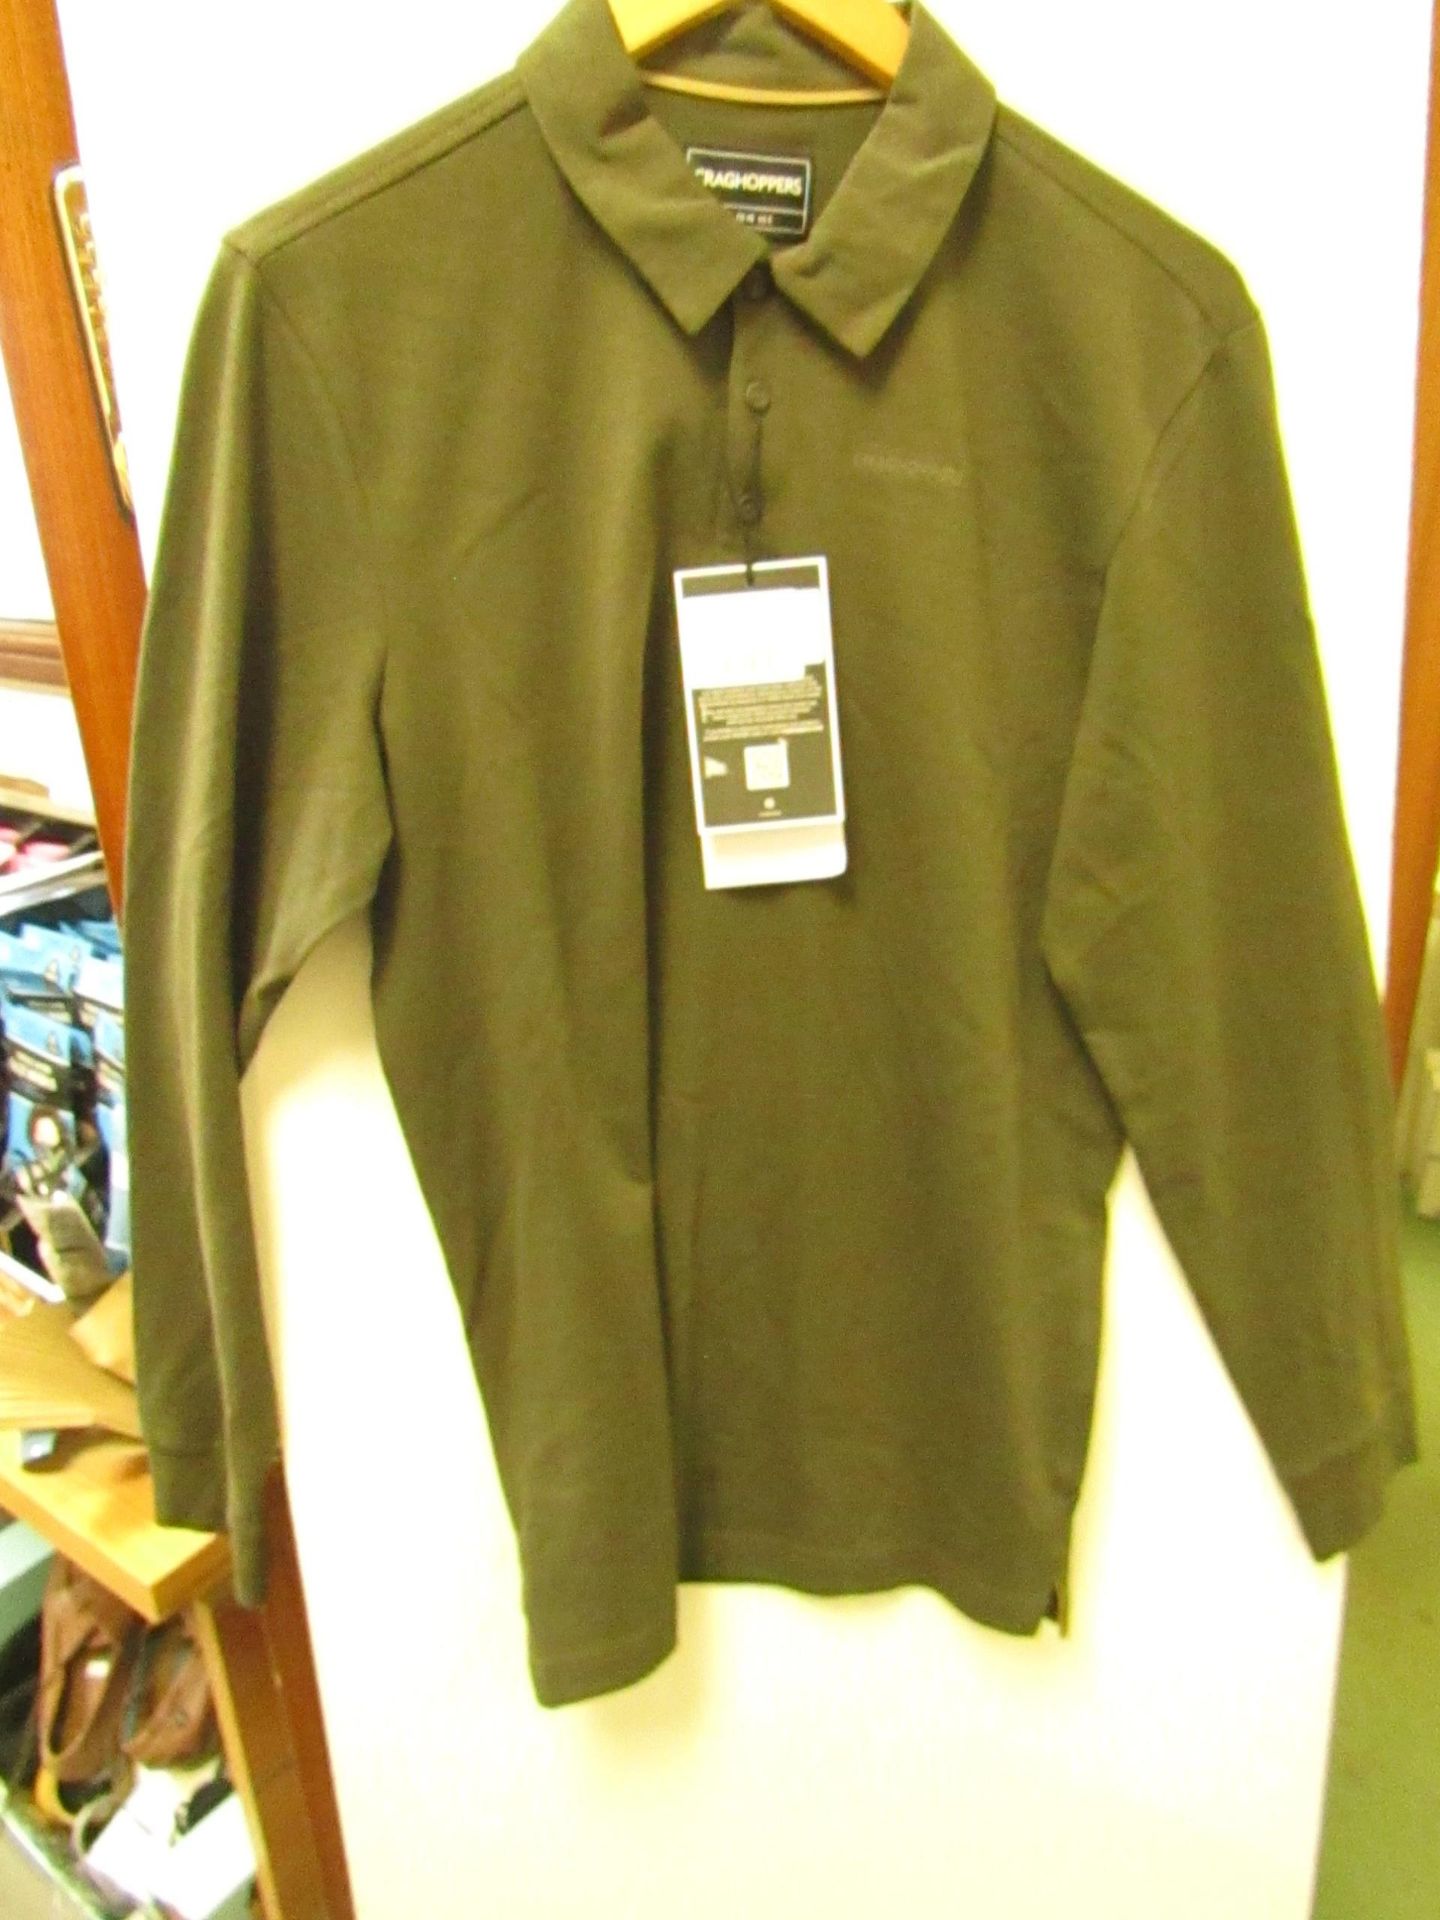 Craghopper Bryson Long Sleeve Polo Shirt, new size S, RRP £45